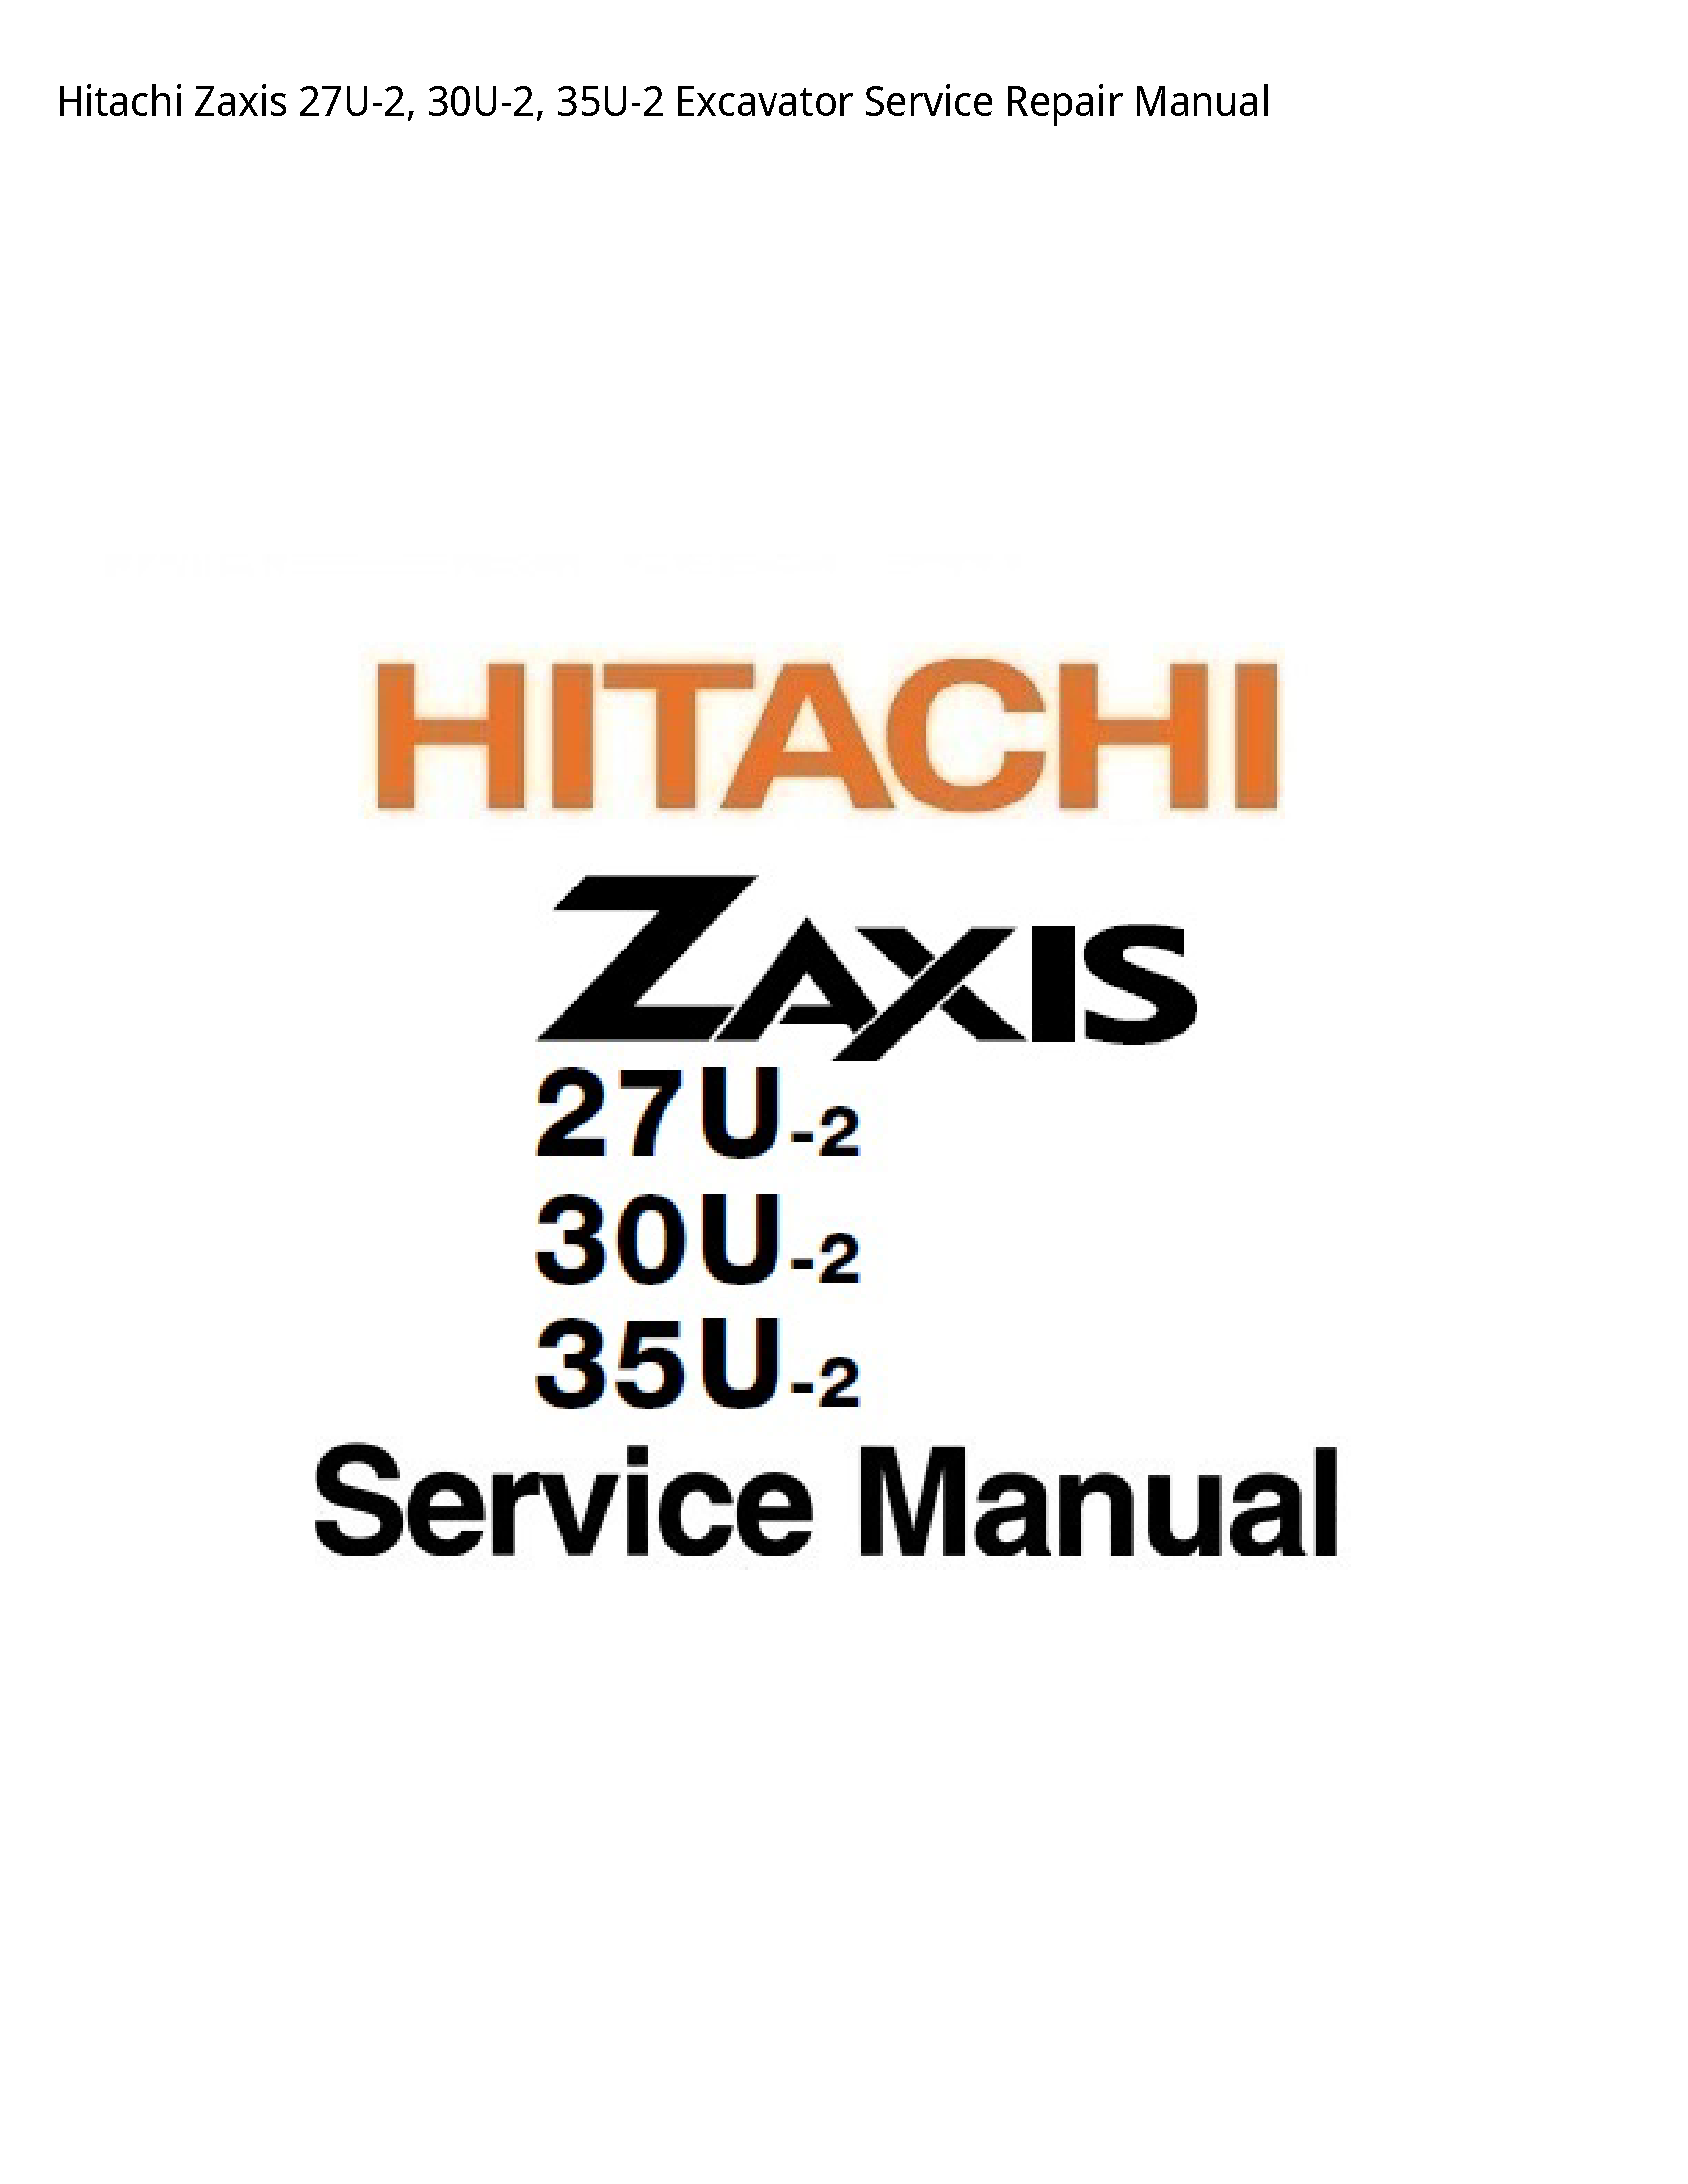 Hitachi 27U-2 Zaxis Excavator manual